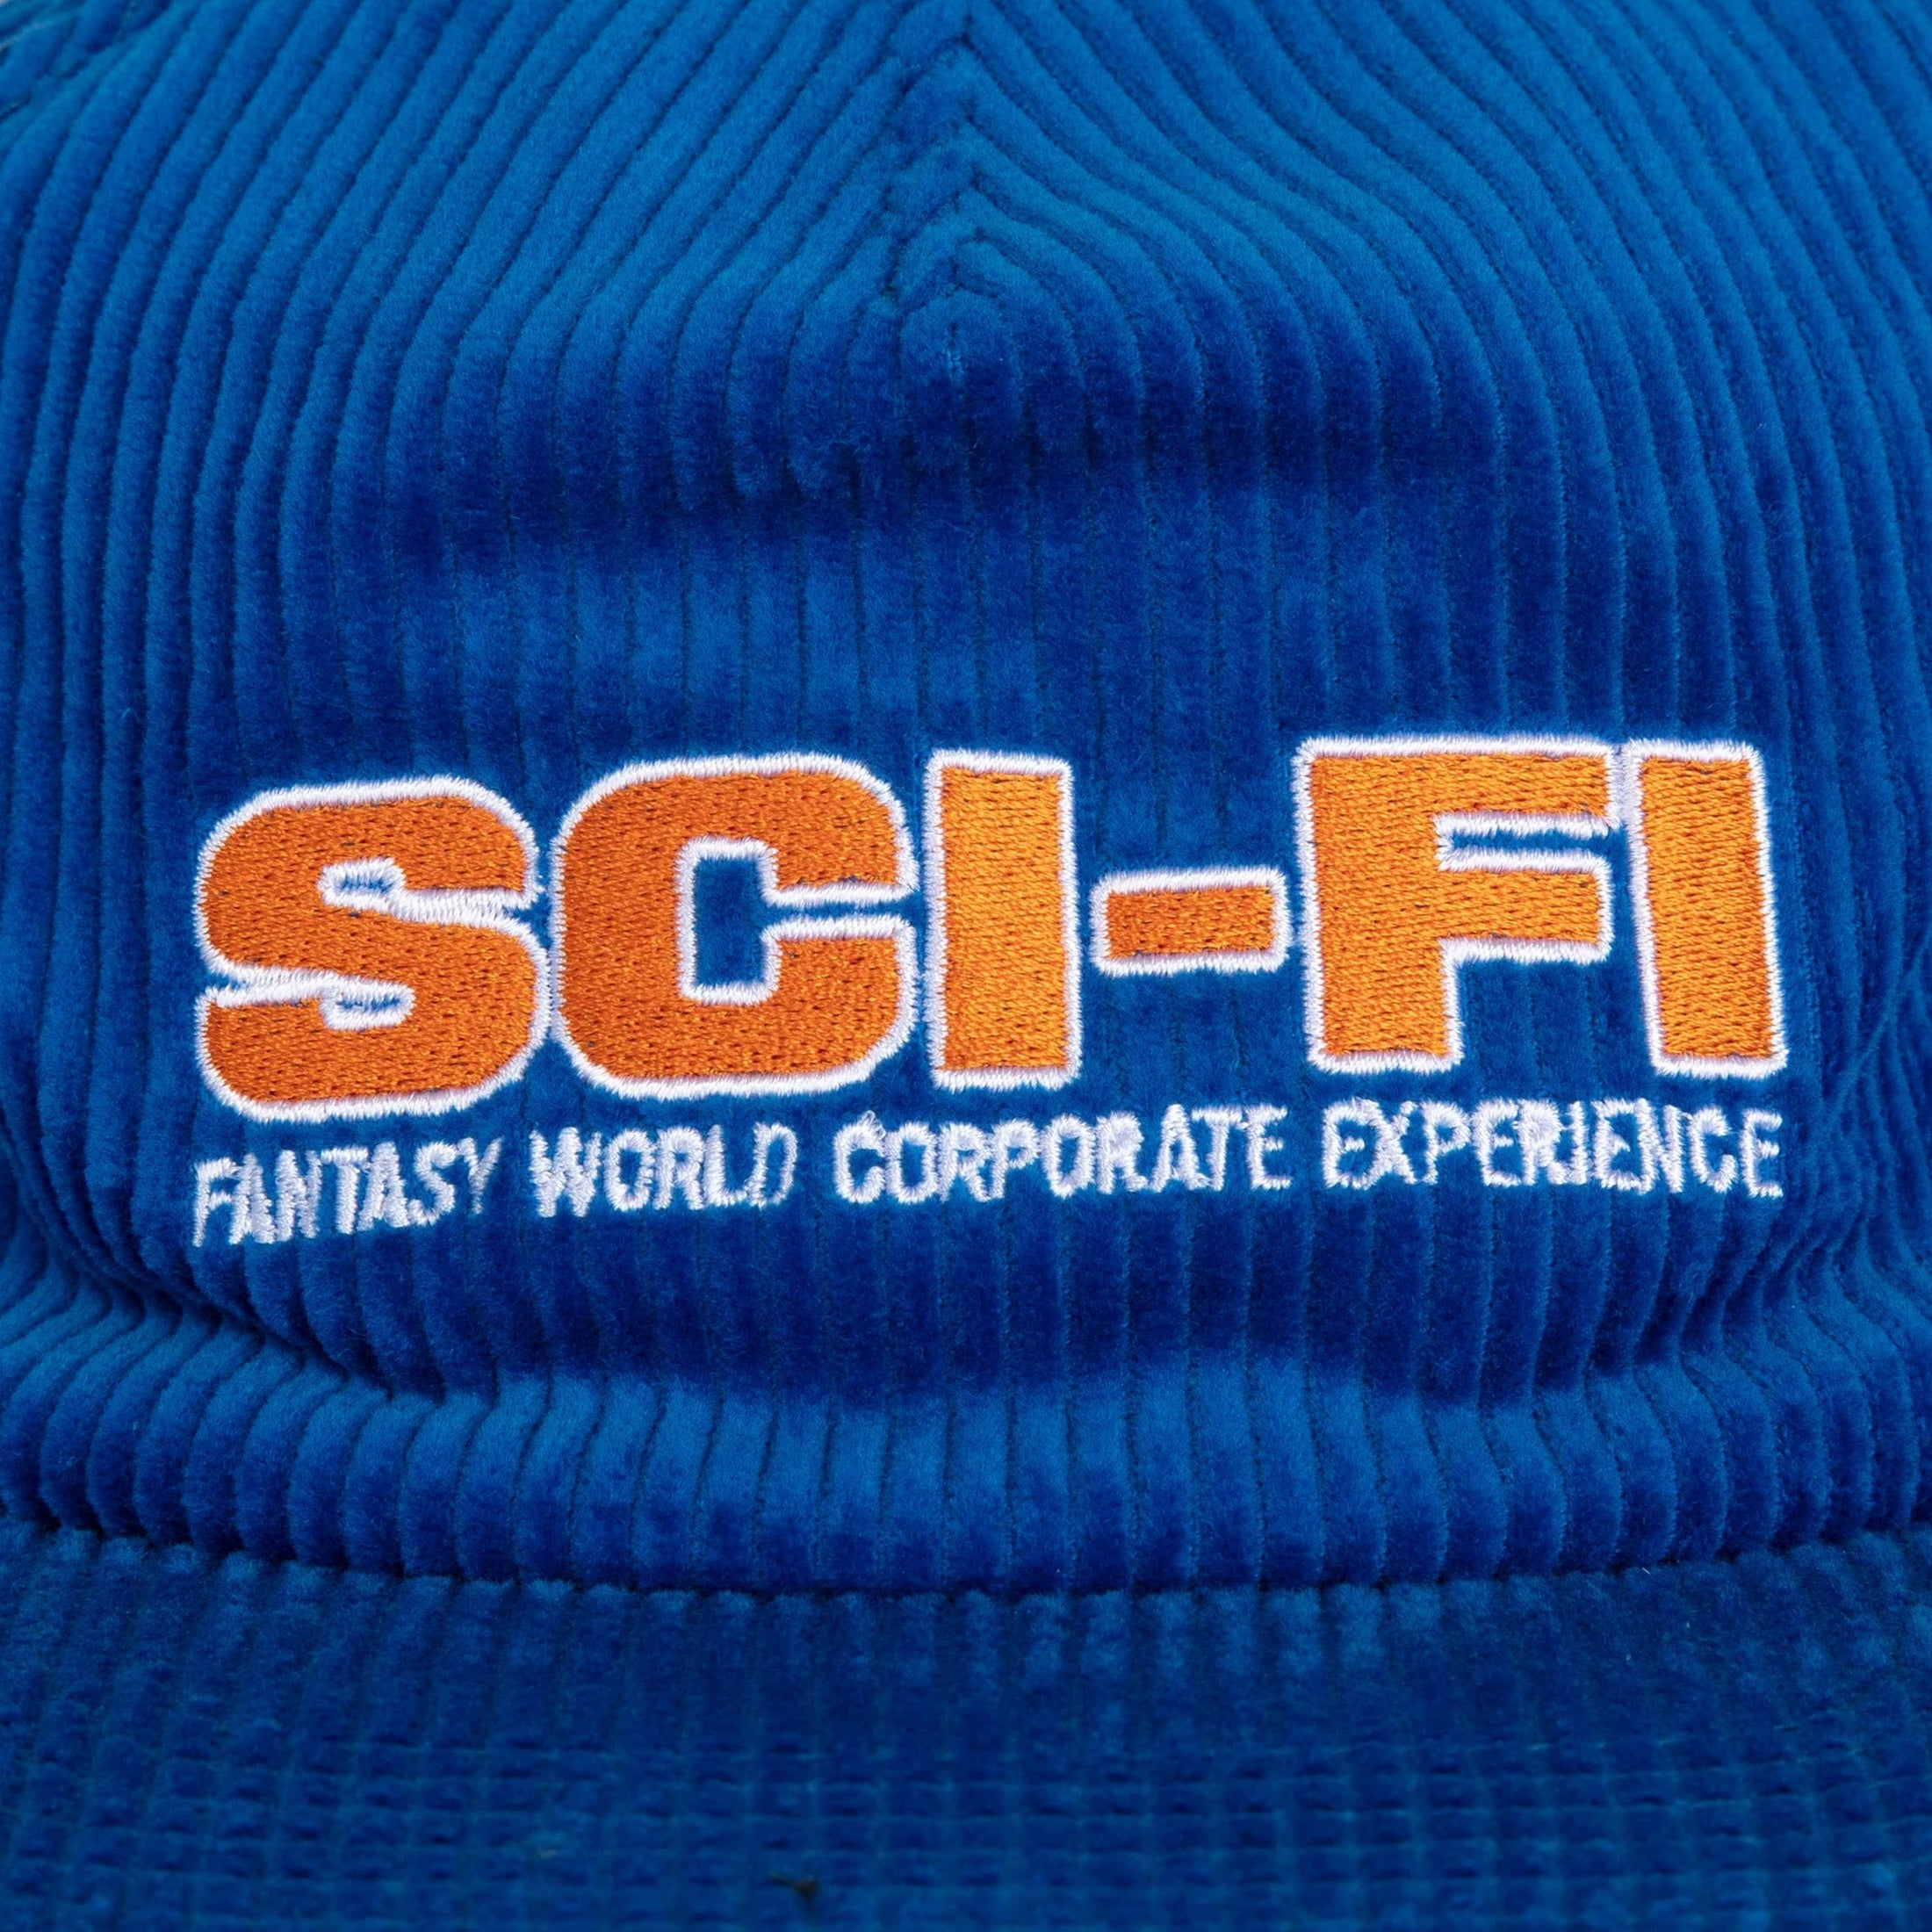 Sci-Fi Fantasy Corporate Experience Cap Blue